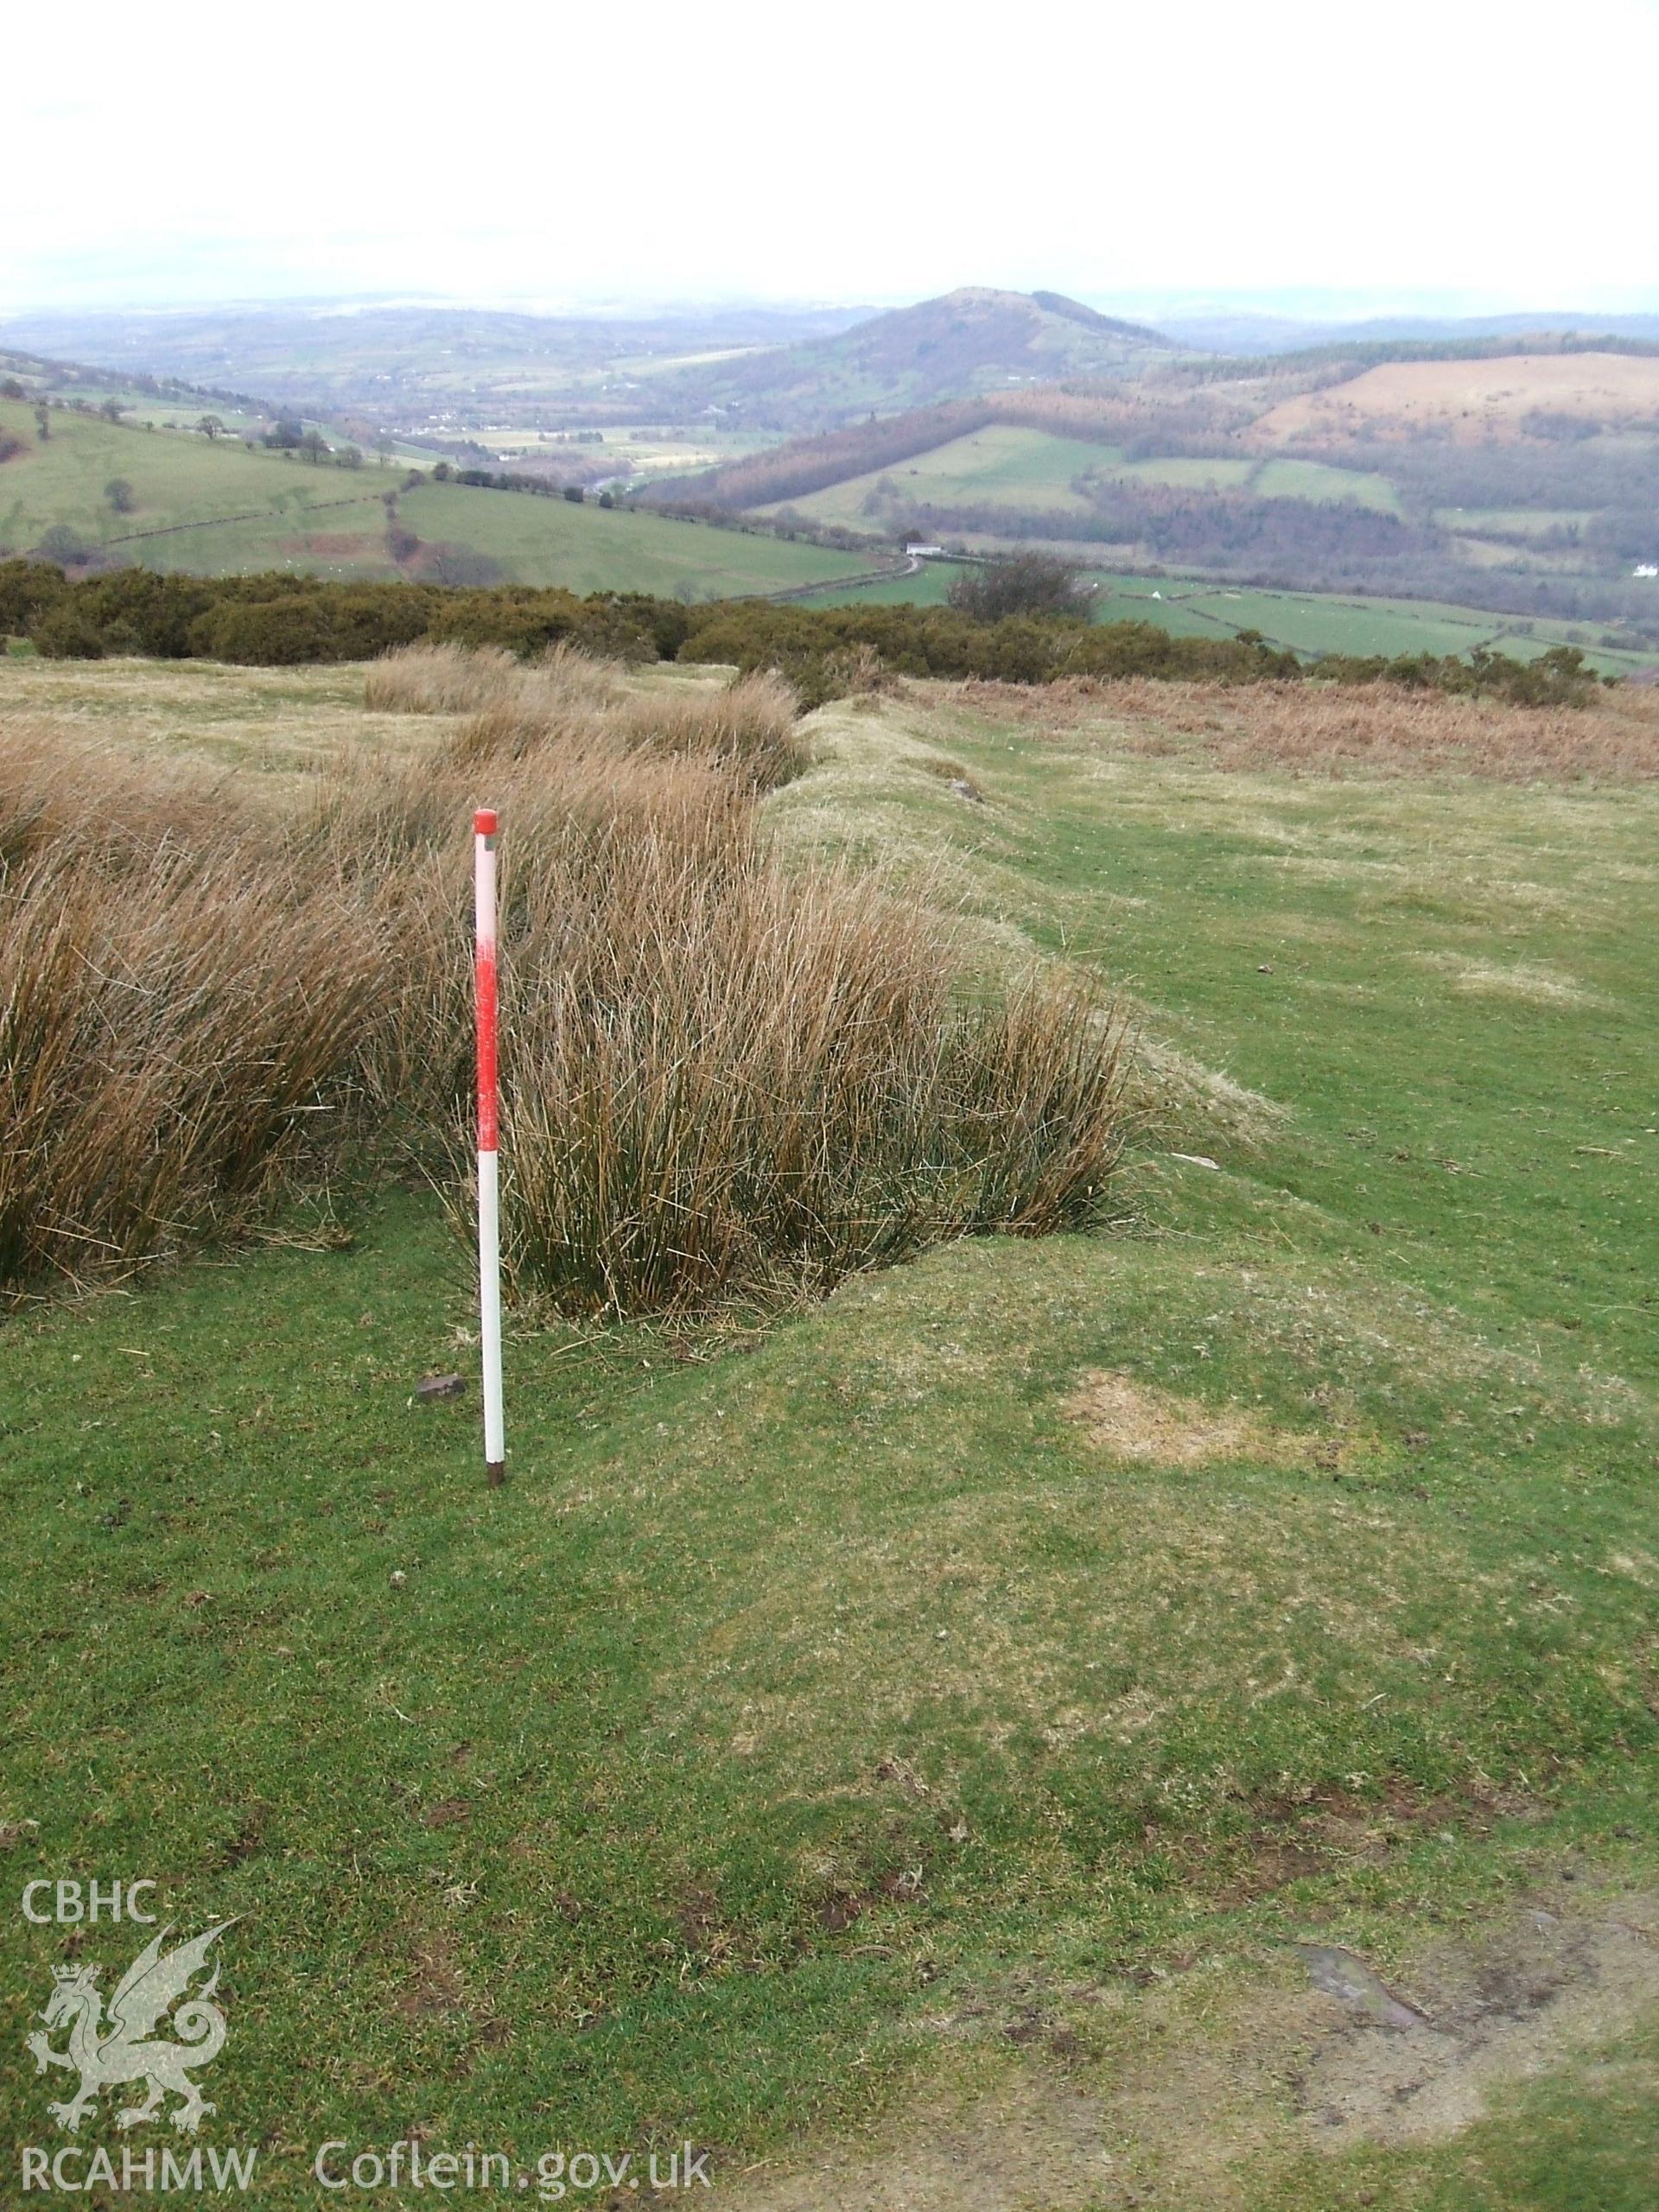 Digital colour photograph of a field boundary at Carreg Wen Fawr y Rugos taken on 04/03/2009 by B. Britton during the Mynydd Llangynidr Upland Survey undertaken by ArchaeoPhysica.